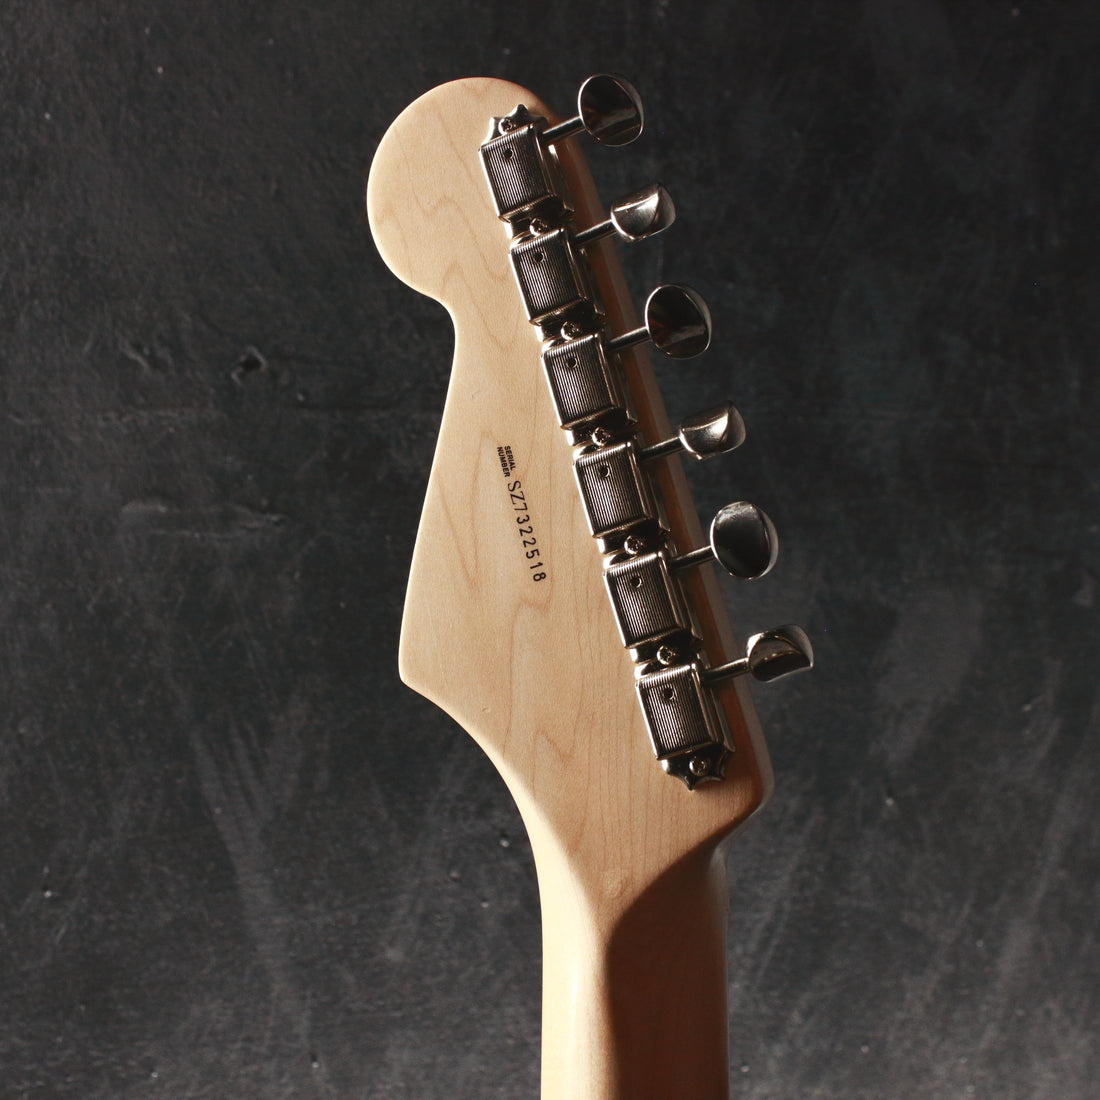 Fender Eric Clapton Stratocaster Pewter Grey 2007